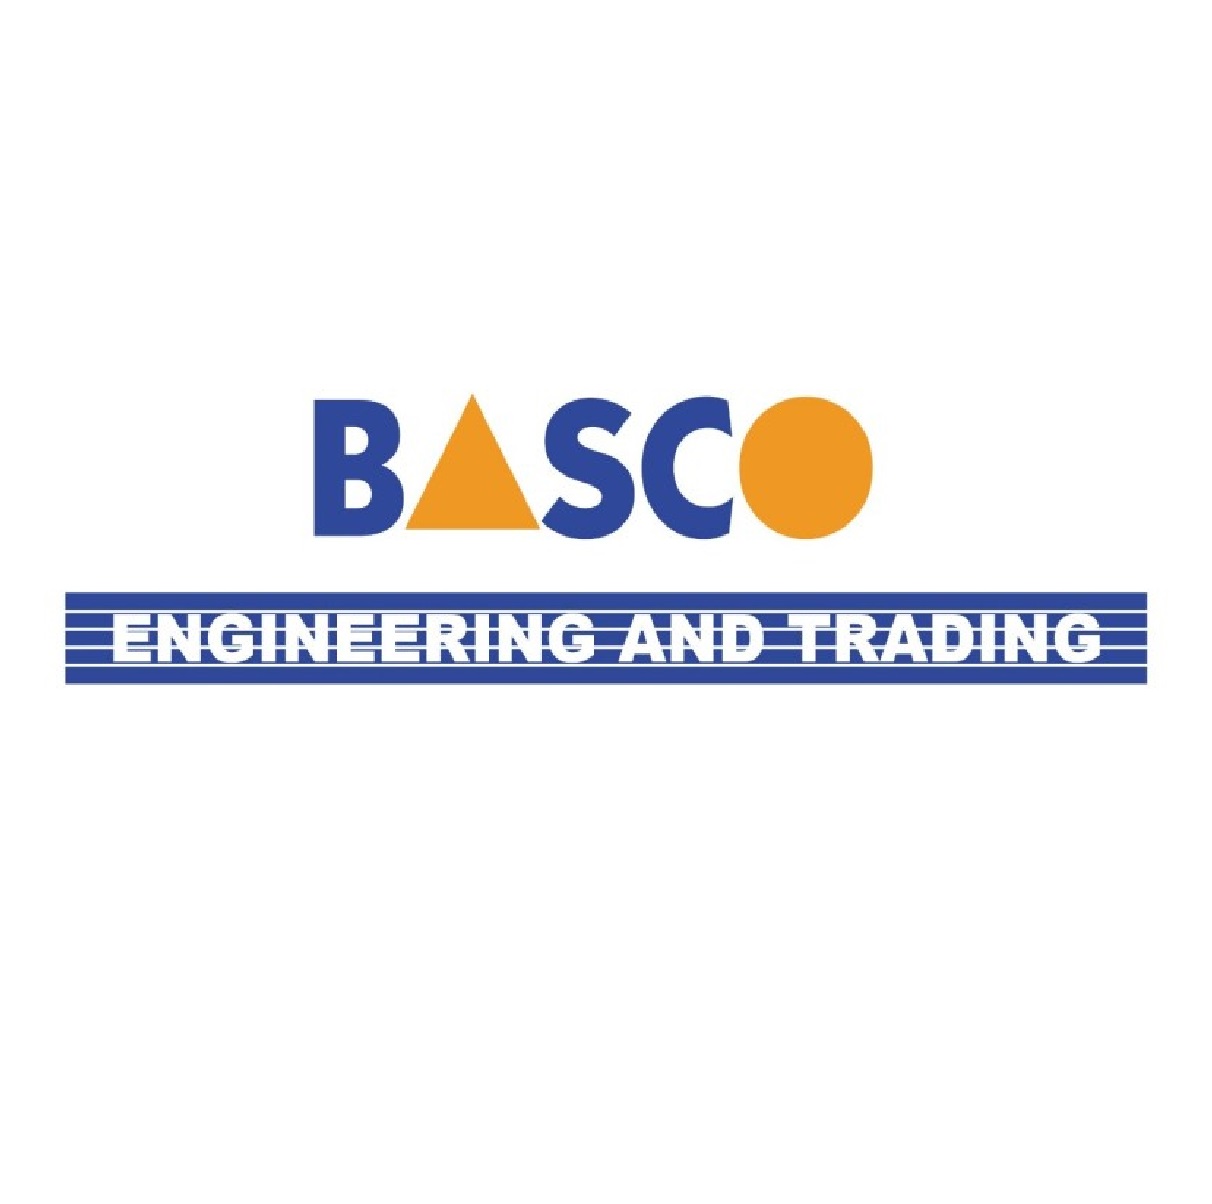 Basco Engineering and Trading Company